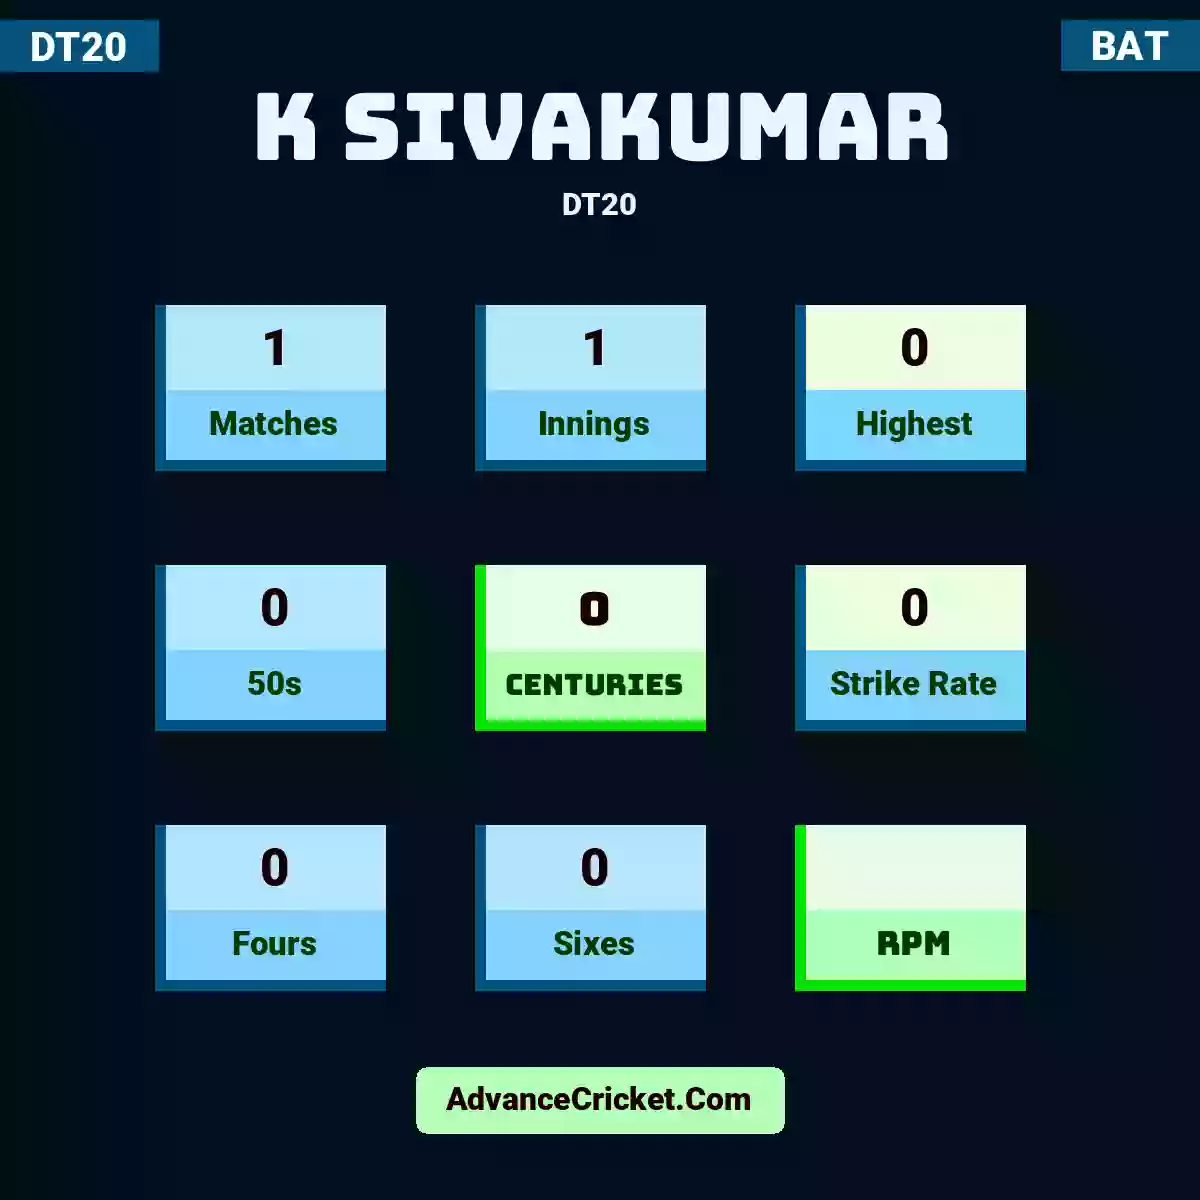 K Sivakumar DT20 , K Sivakumar played 1 matches, scored 0 runs as highest, 0 half-centuries, and 0 centuries, with a strike rate of 0. K.Sivakumar hit 0 fours and 0 sixes.